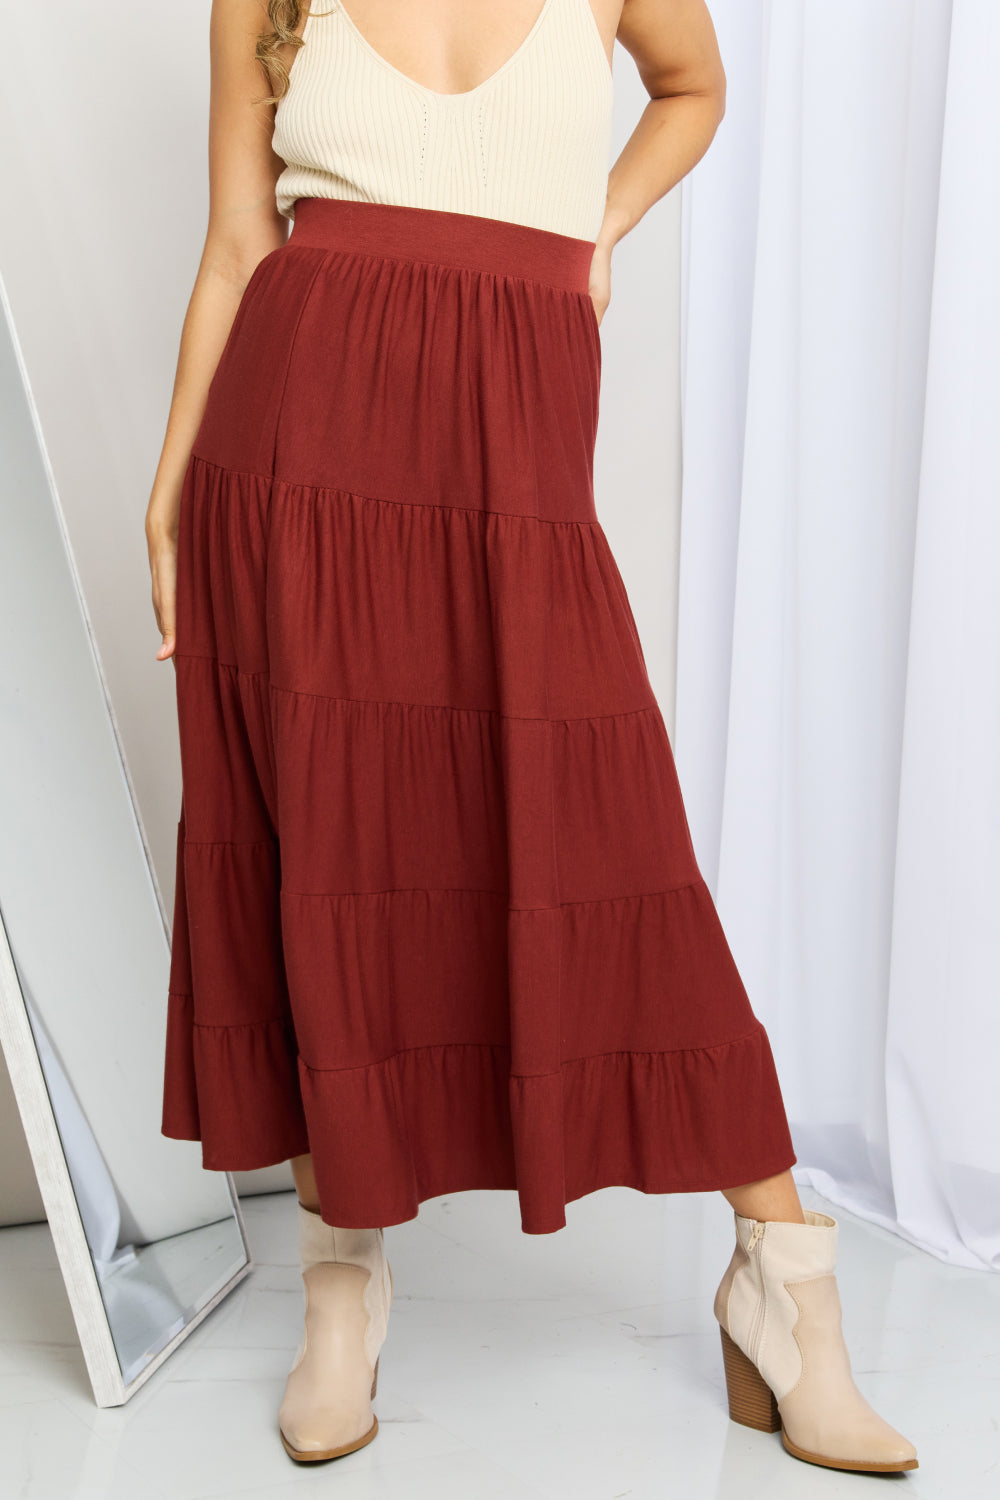 Zenana Premium Women's Skirts On Sale Up To 90% Off Retail